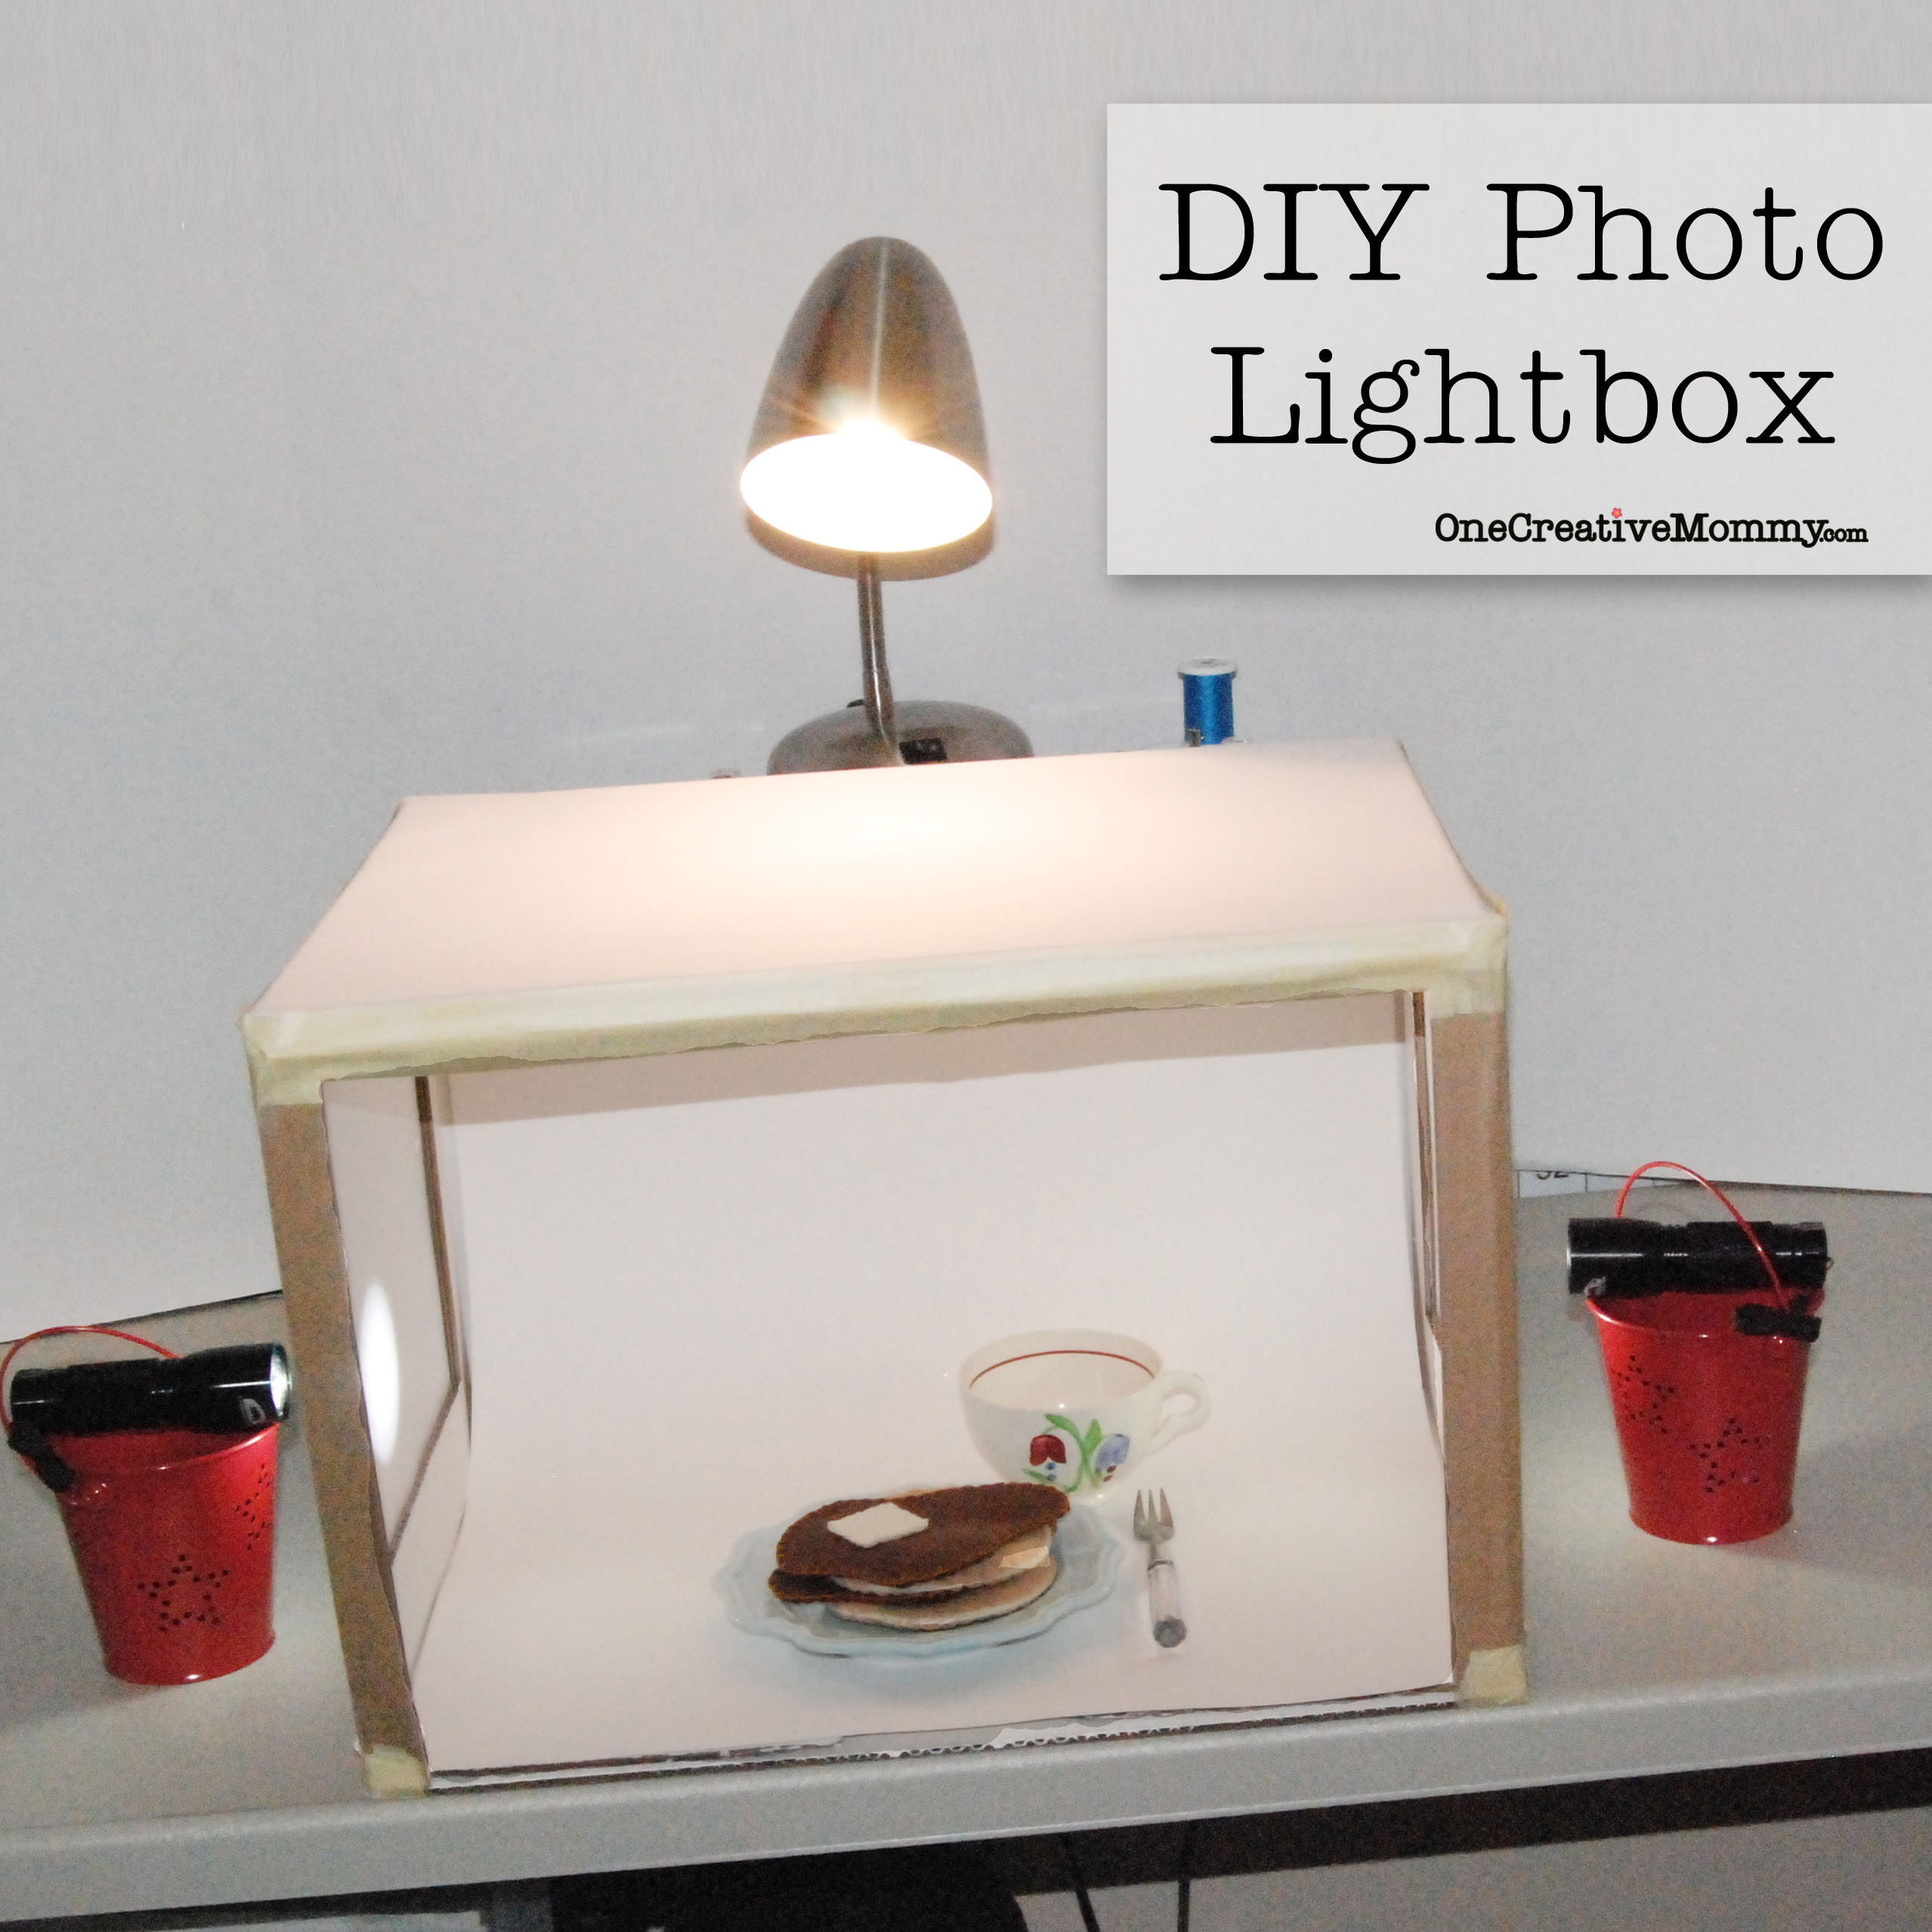 DIY Photography Light Box
 Grow Your Blog Series DIY Lightbox onecreativemommy